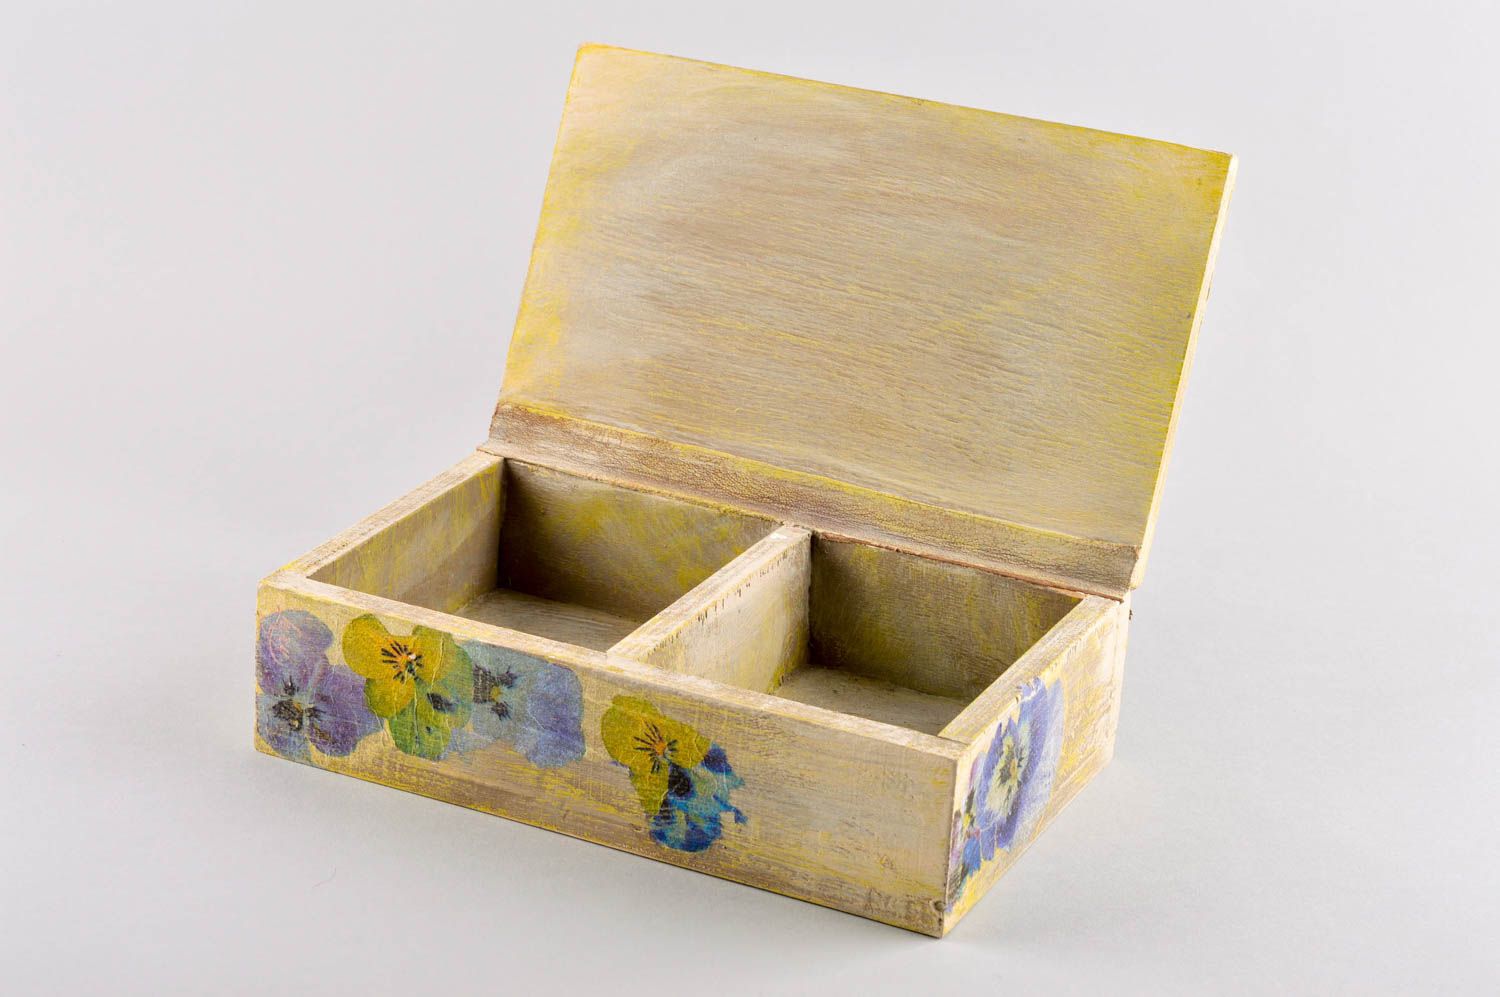 Beautiful handmade wooden box design decorative box for accessories gift ideas photo 3